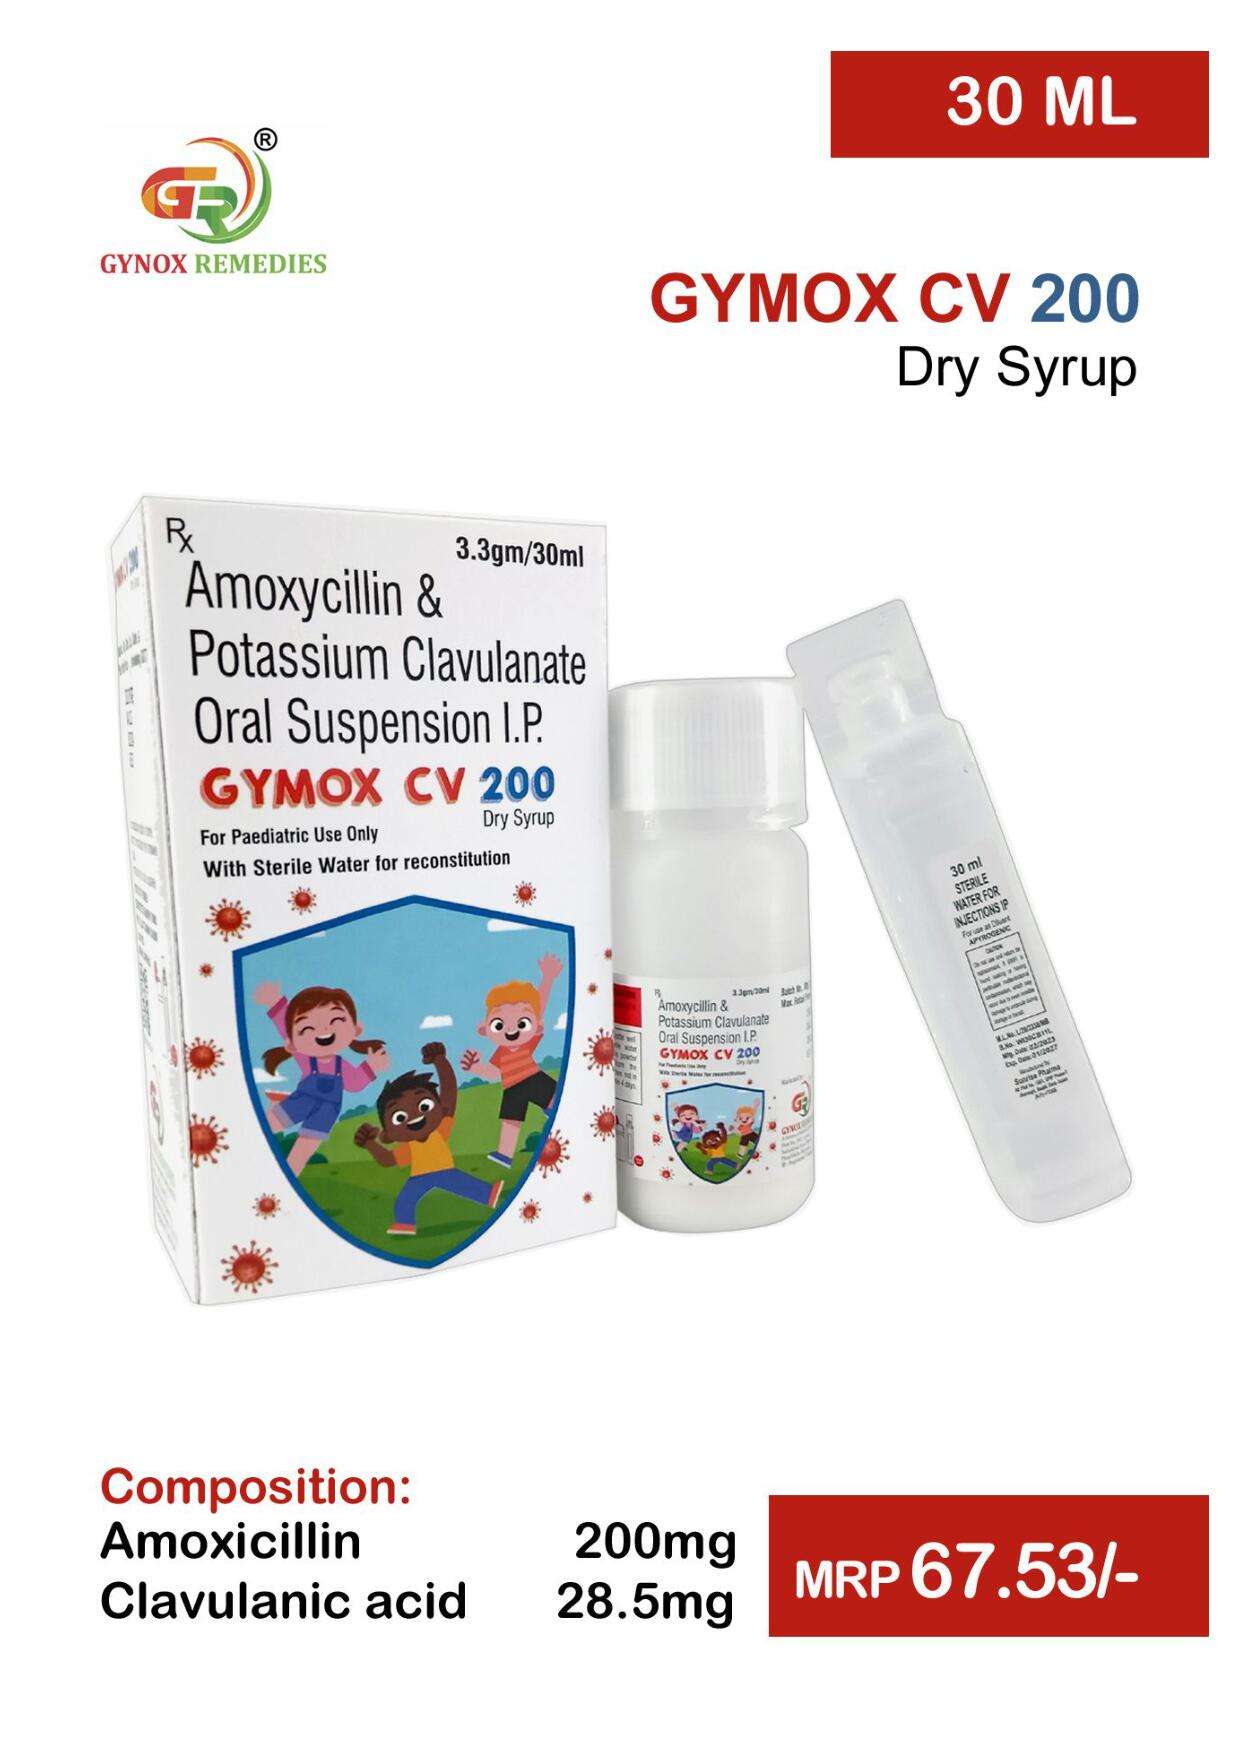 amoxicillin 200 mg+clavulanic acid
28.5 mg /5mlsyrup